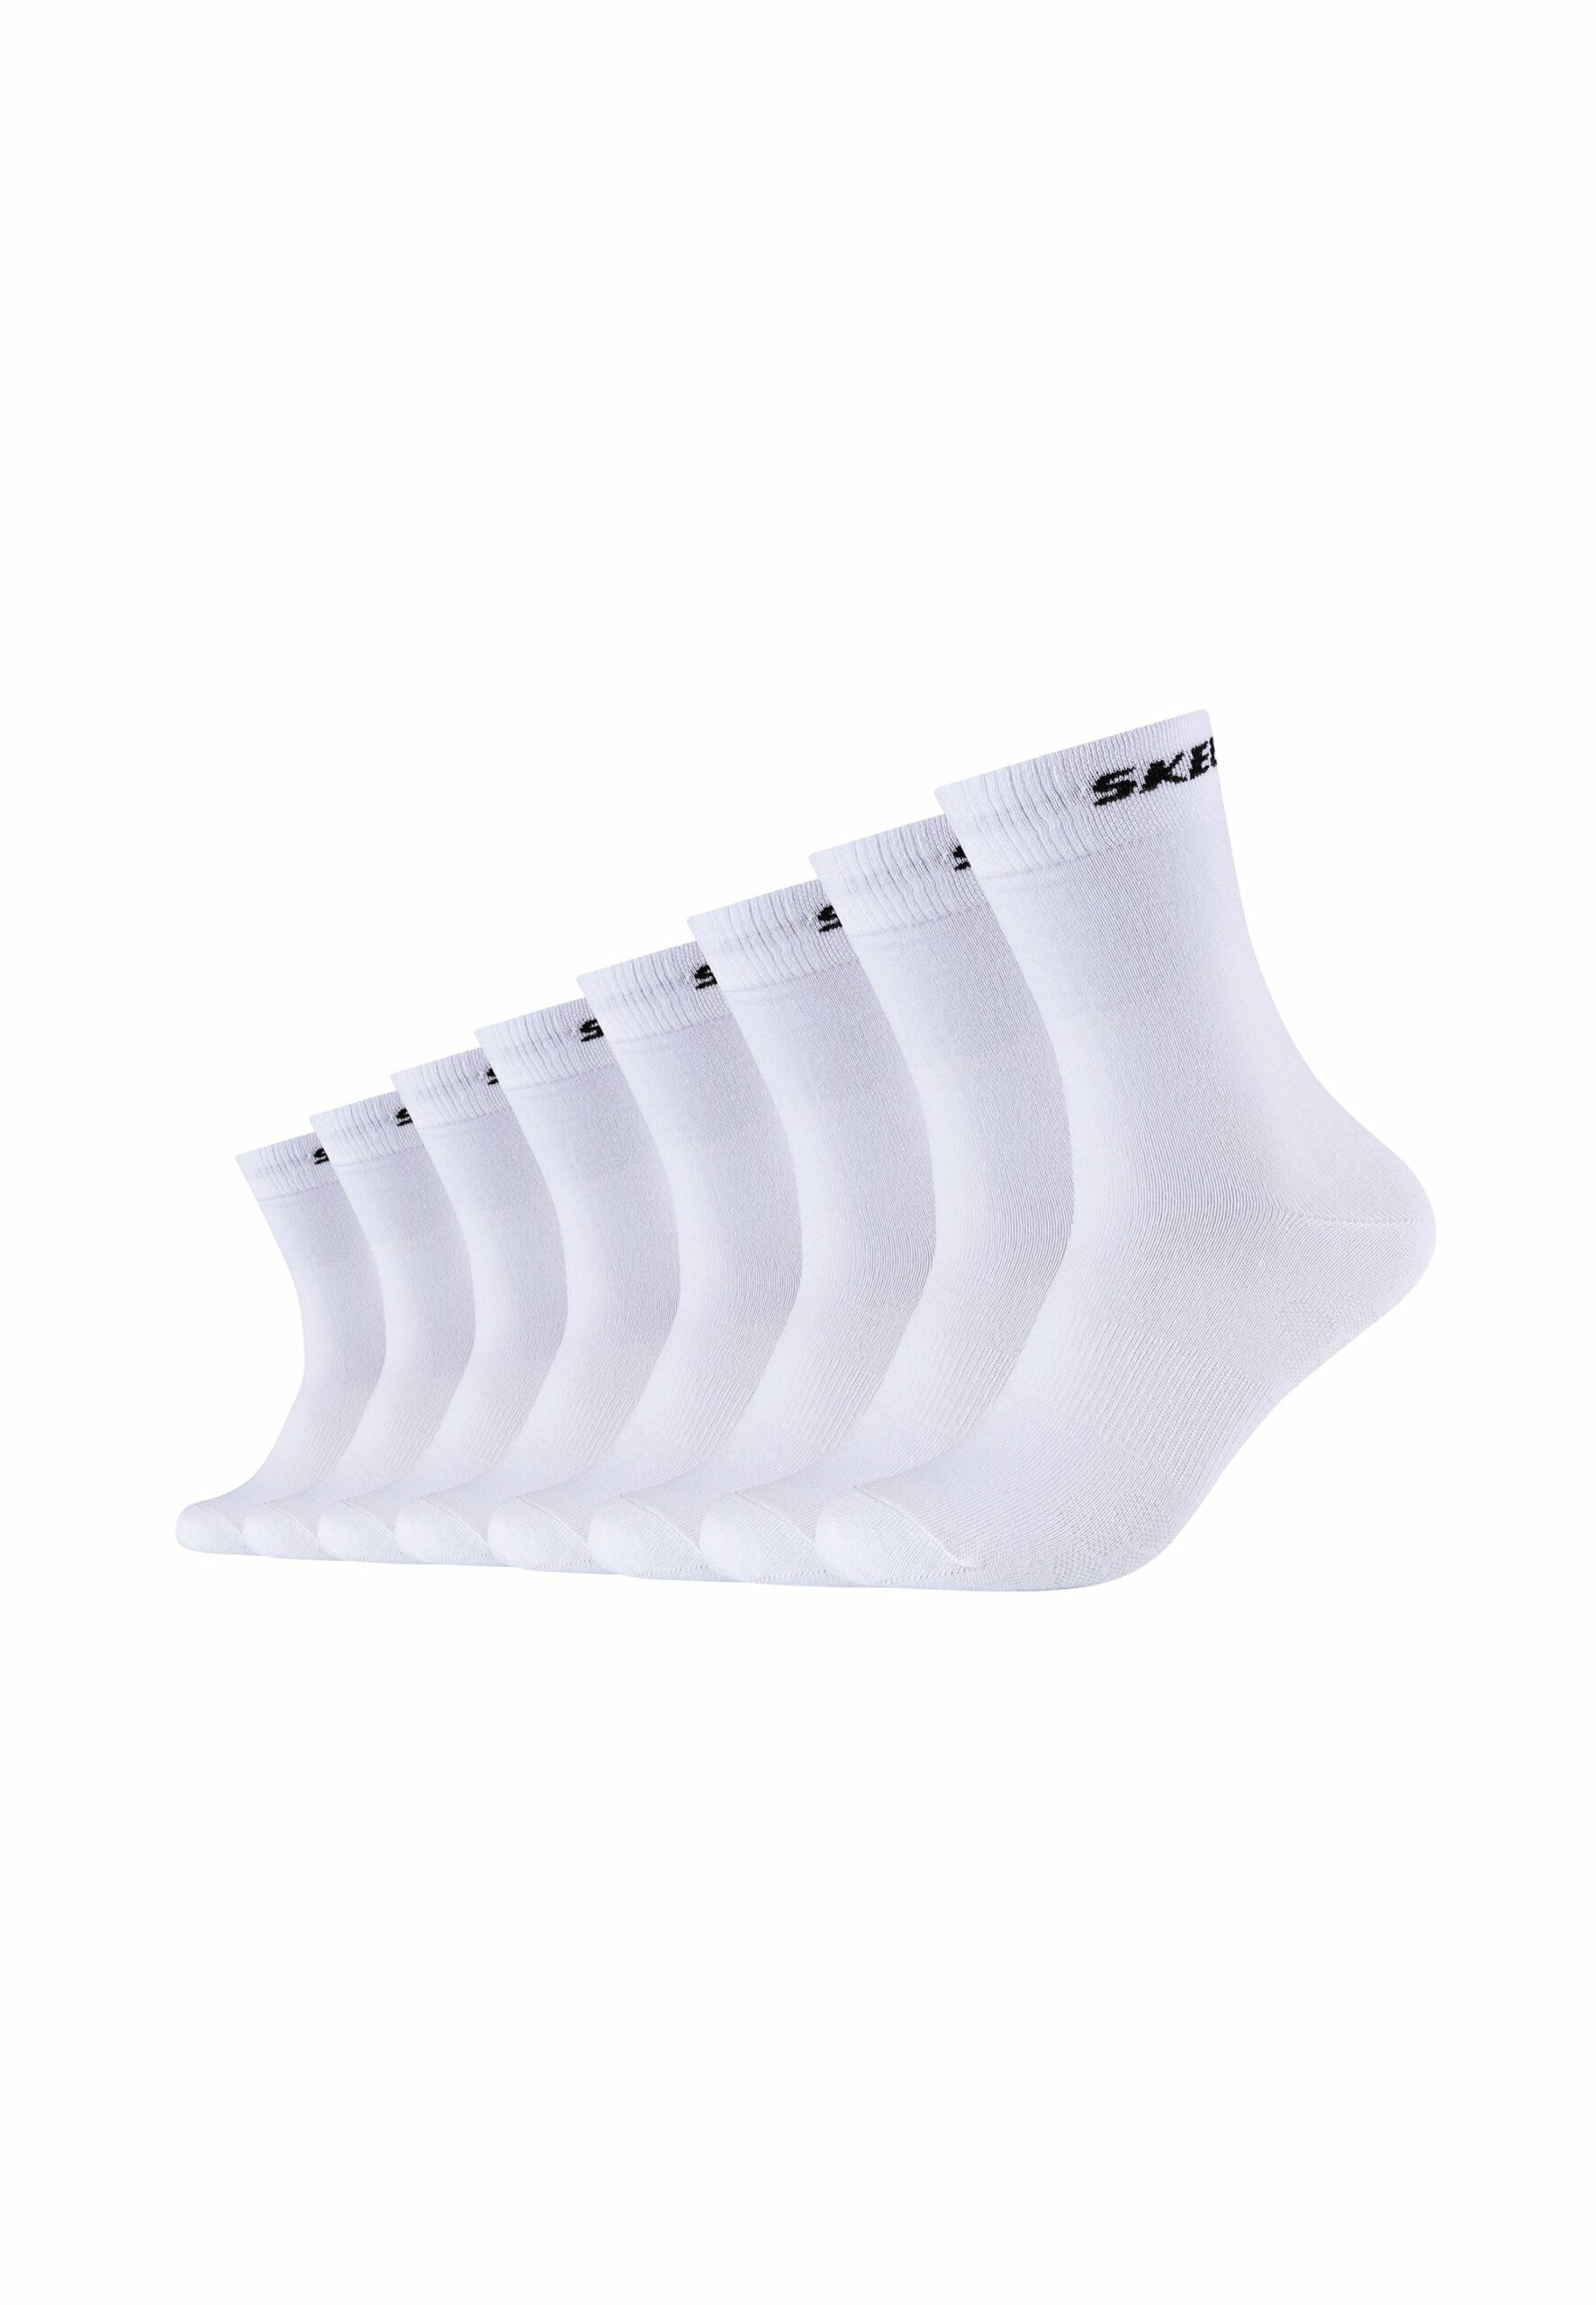 Mesh bei organic kaufen 8er Pack Socken Ventilation Skechers white